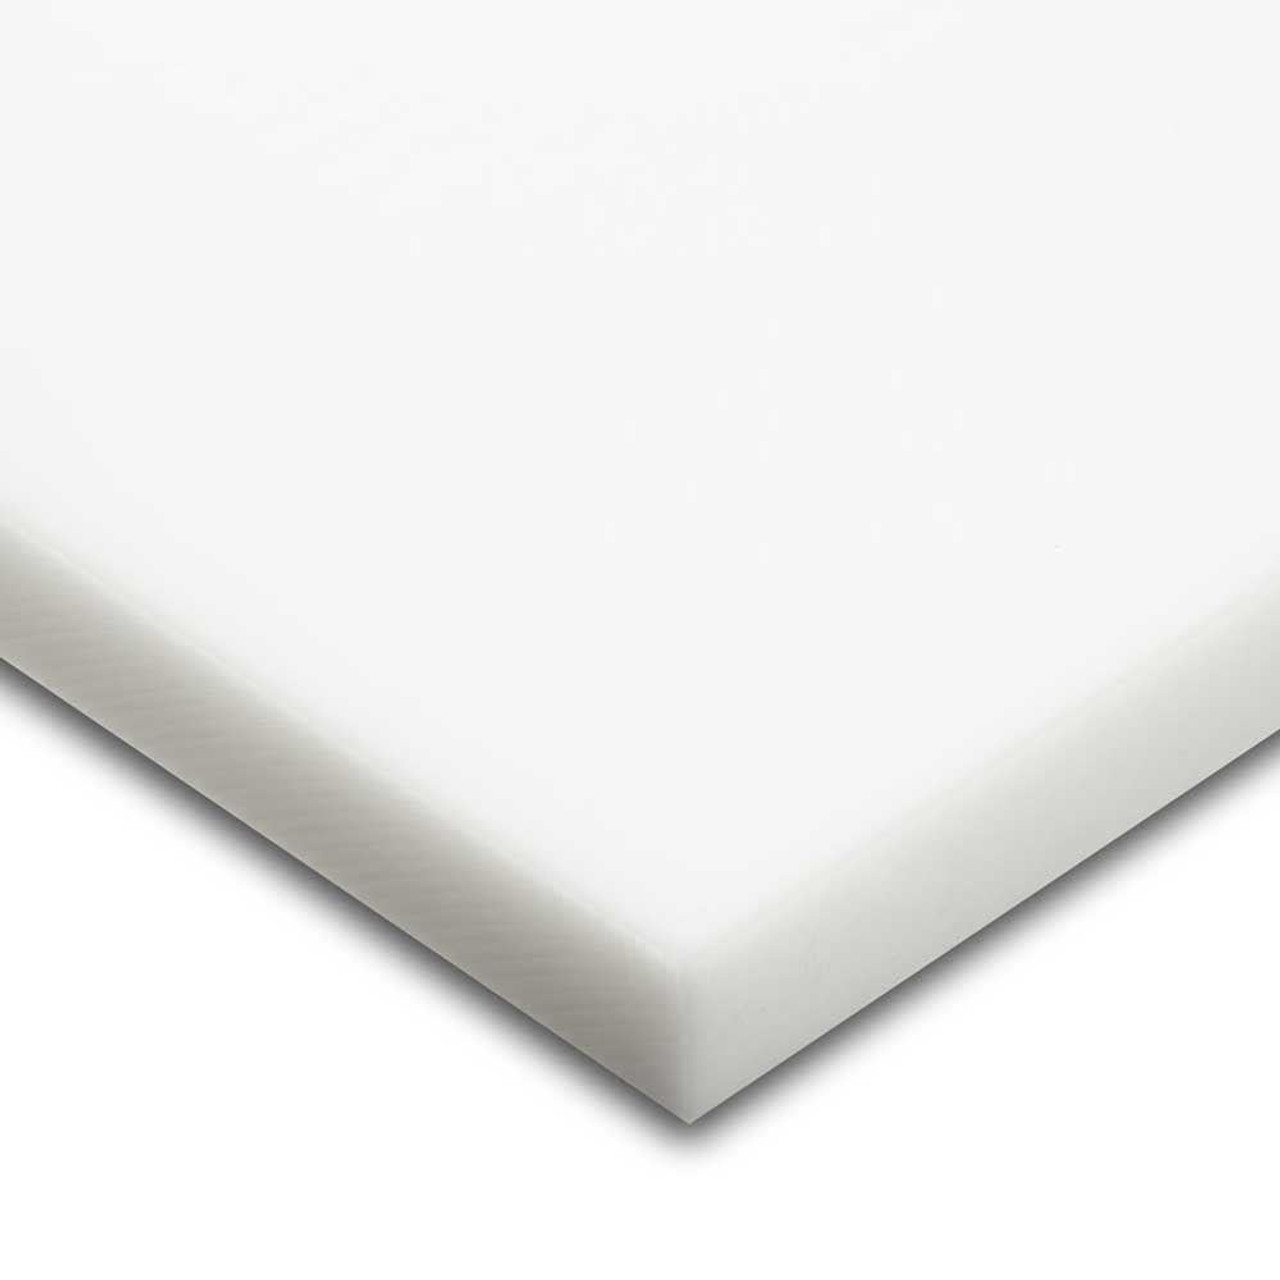 1.25" x 7" x 12", Acetal Plastic Sheet, White